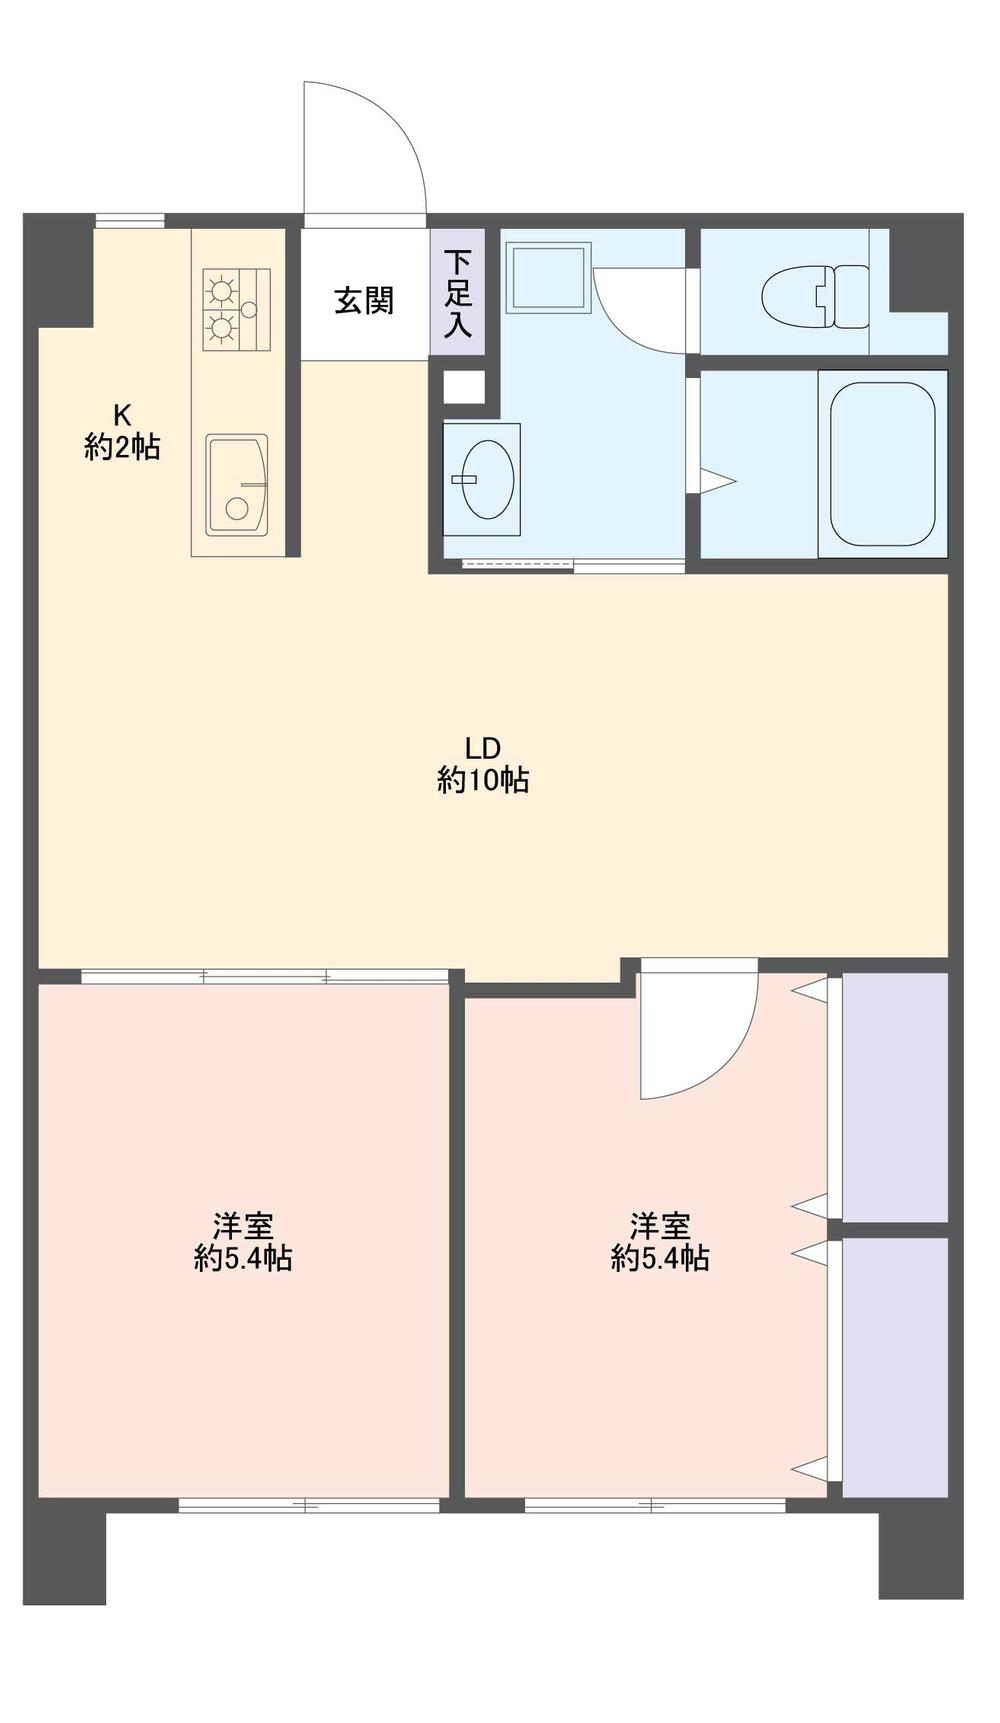 Floor plan. 2LDK, Price 9.5 million yen, Occupied area 54.81 sq m